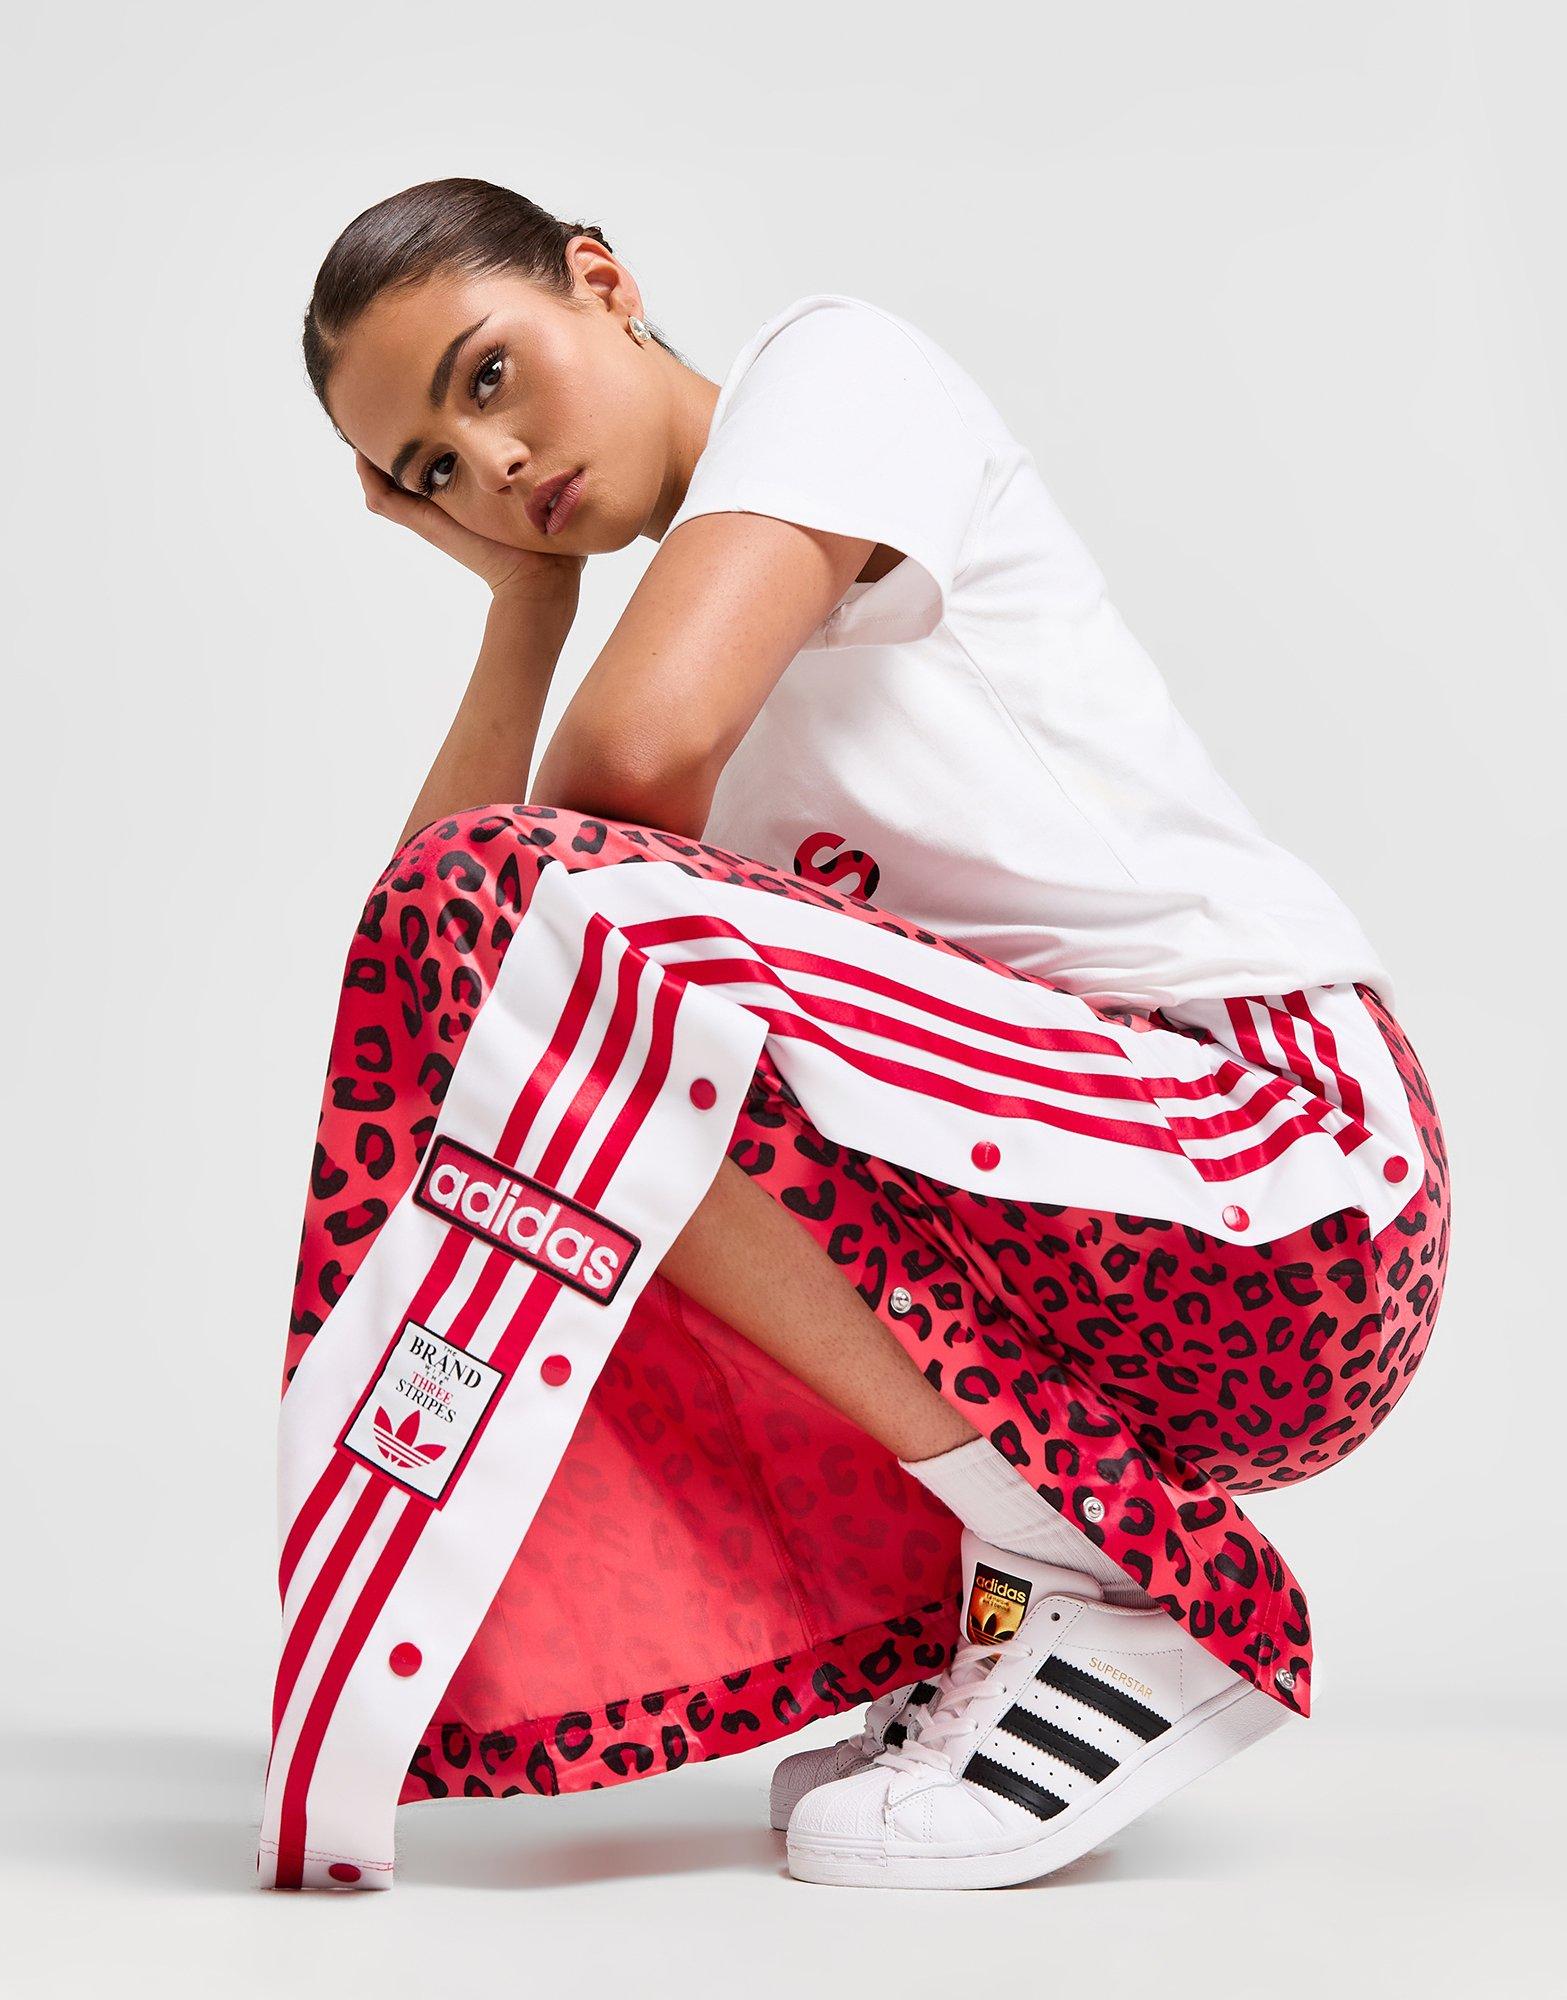 adidas Originals 'Leopard Luxe' satin look pyjama style wide leg